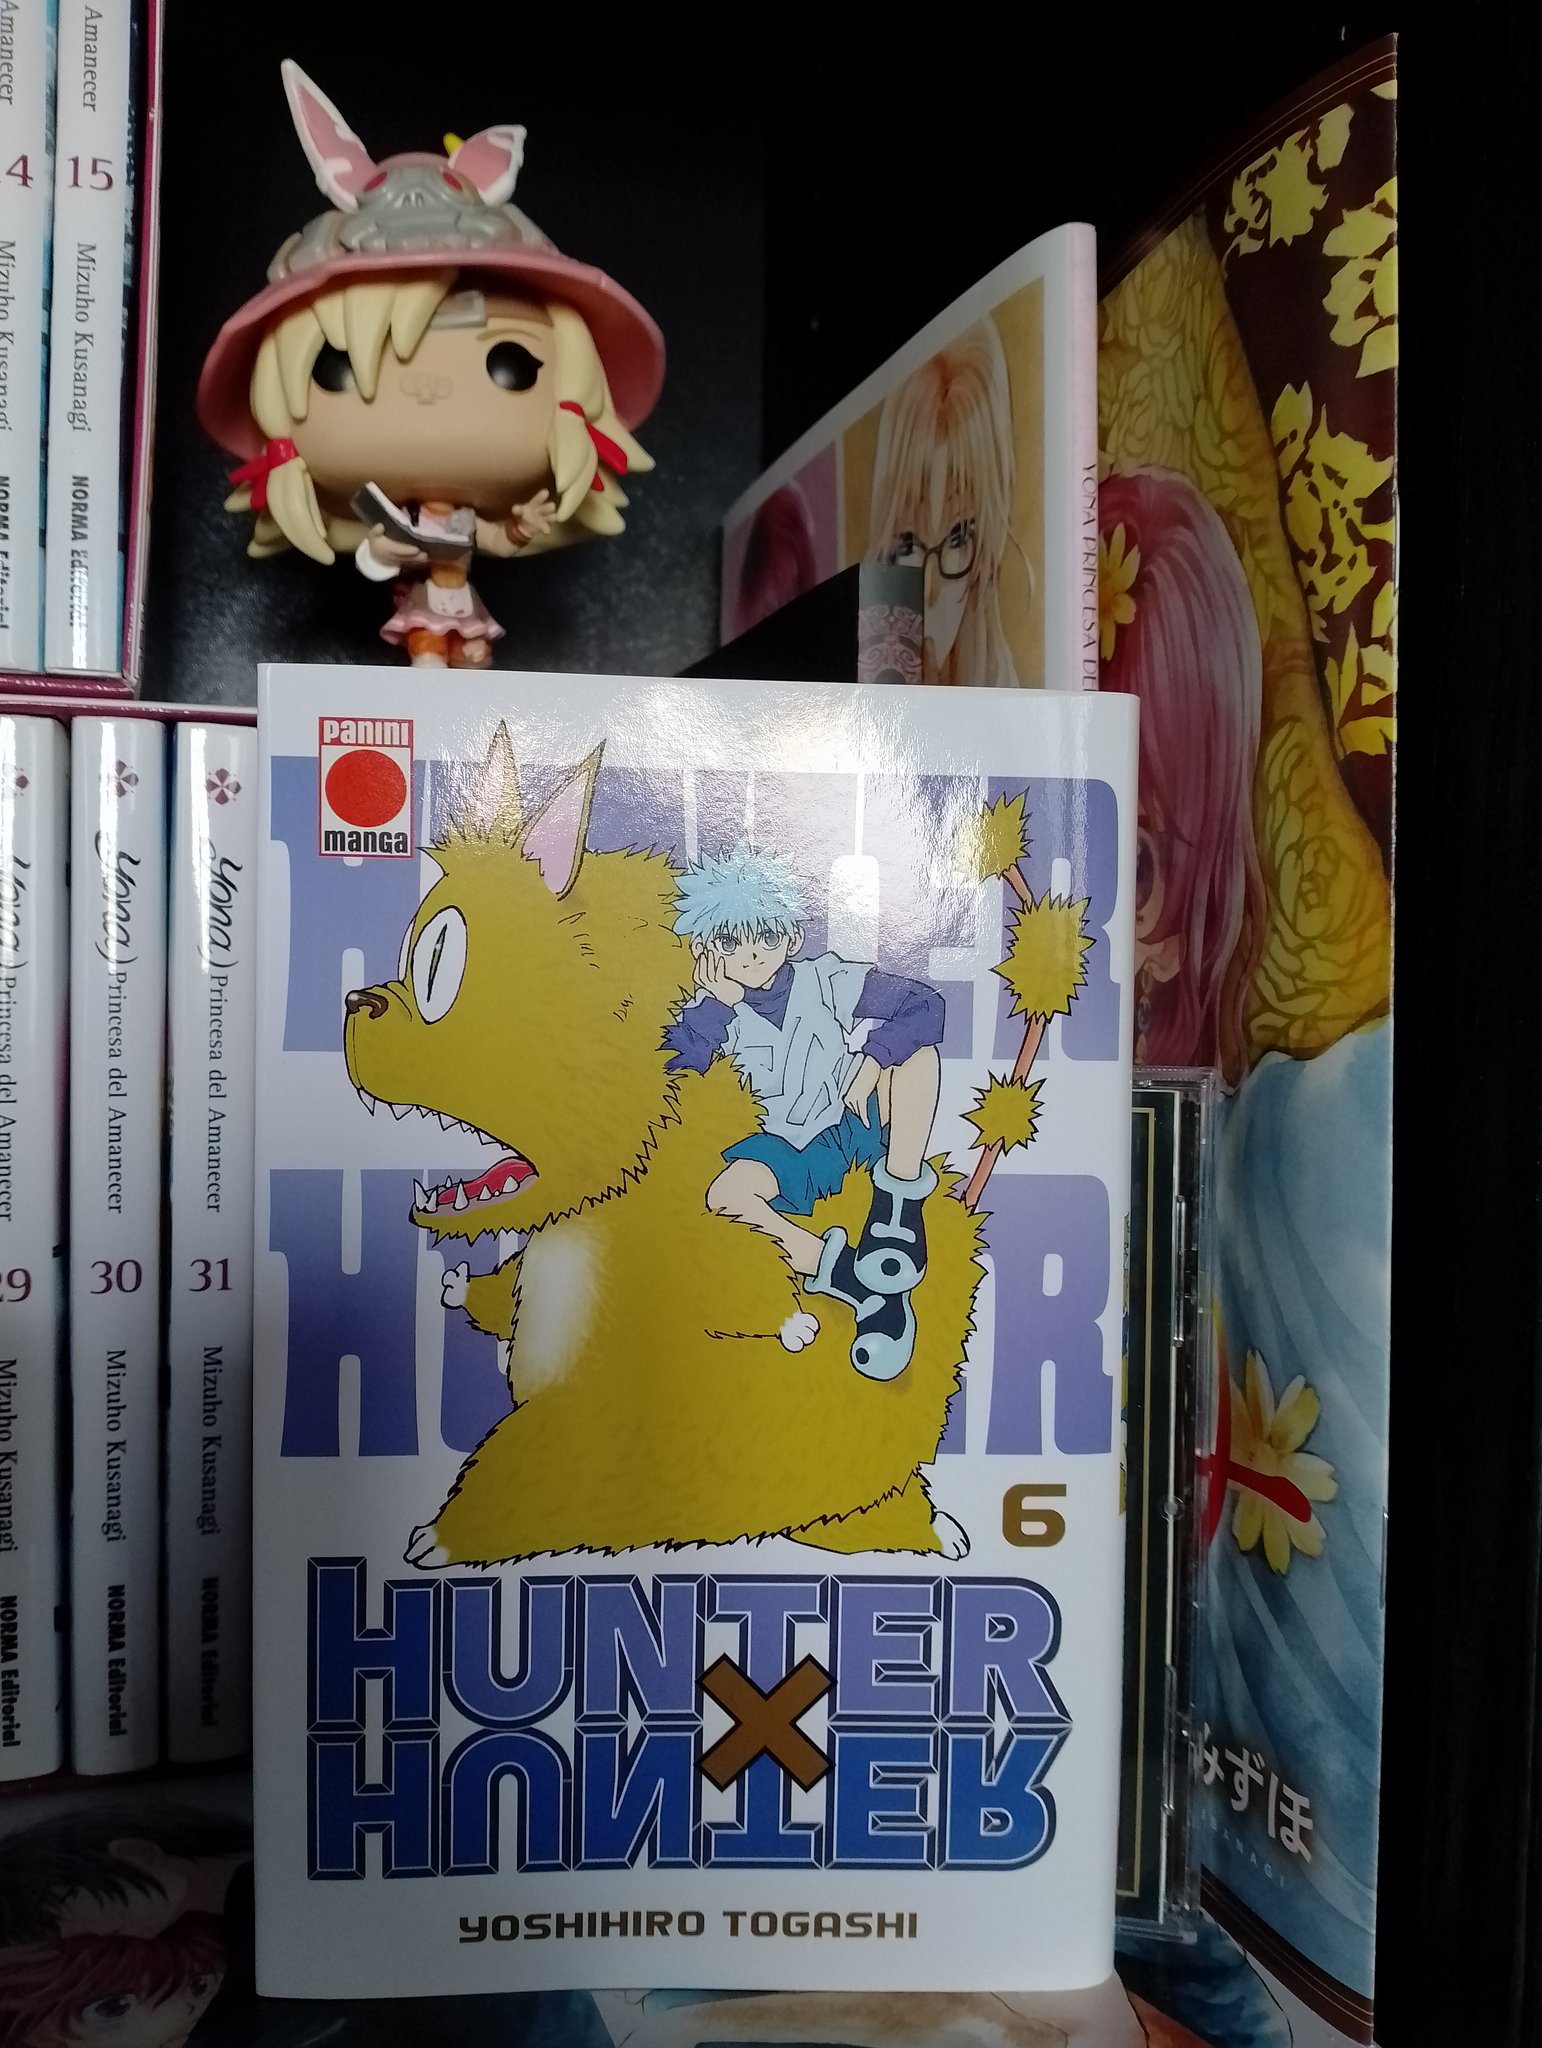 Hunter X Hunter Set 6 DVD